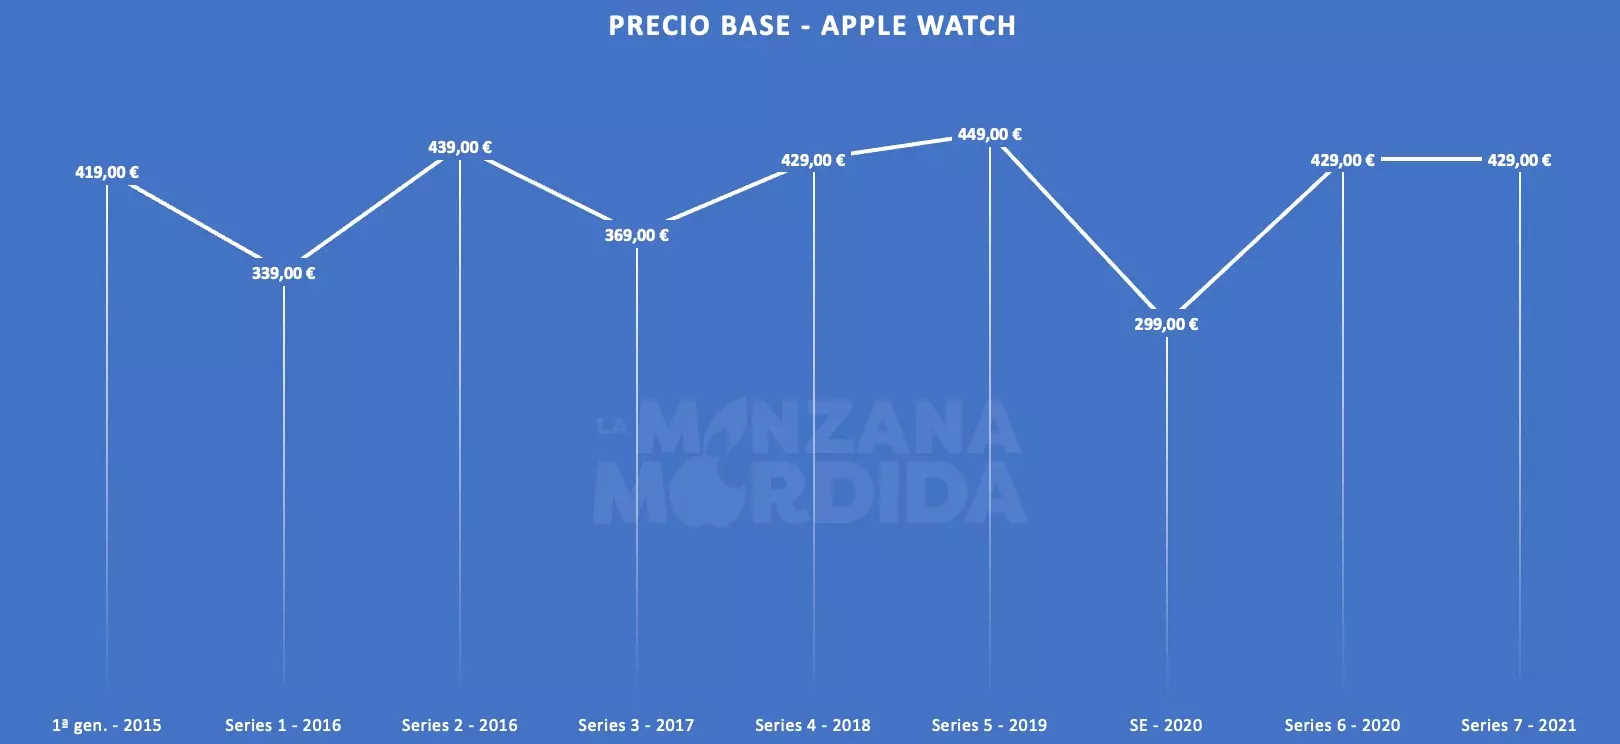 Apple hodinky evolucion precio